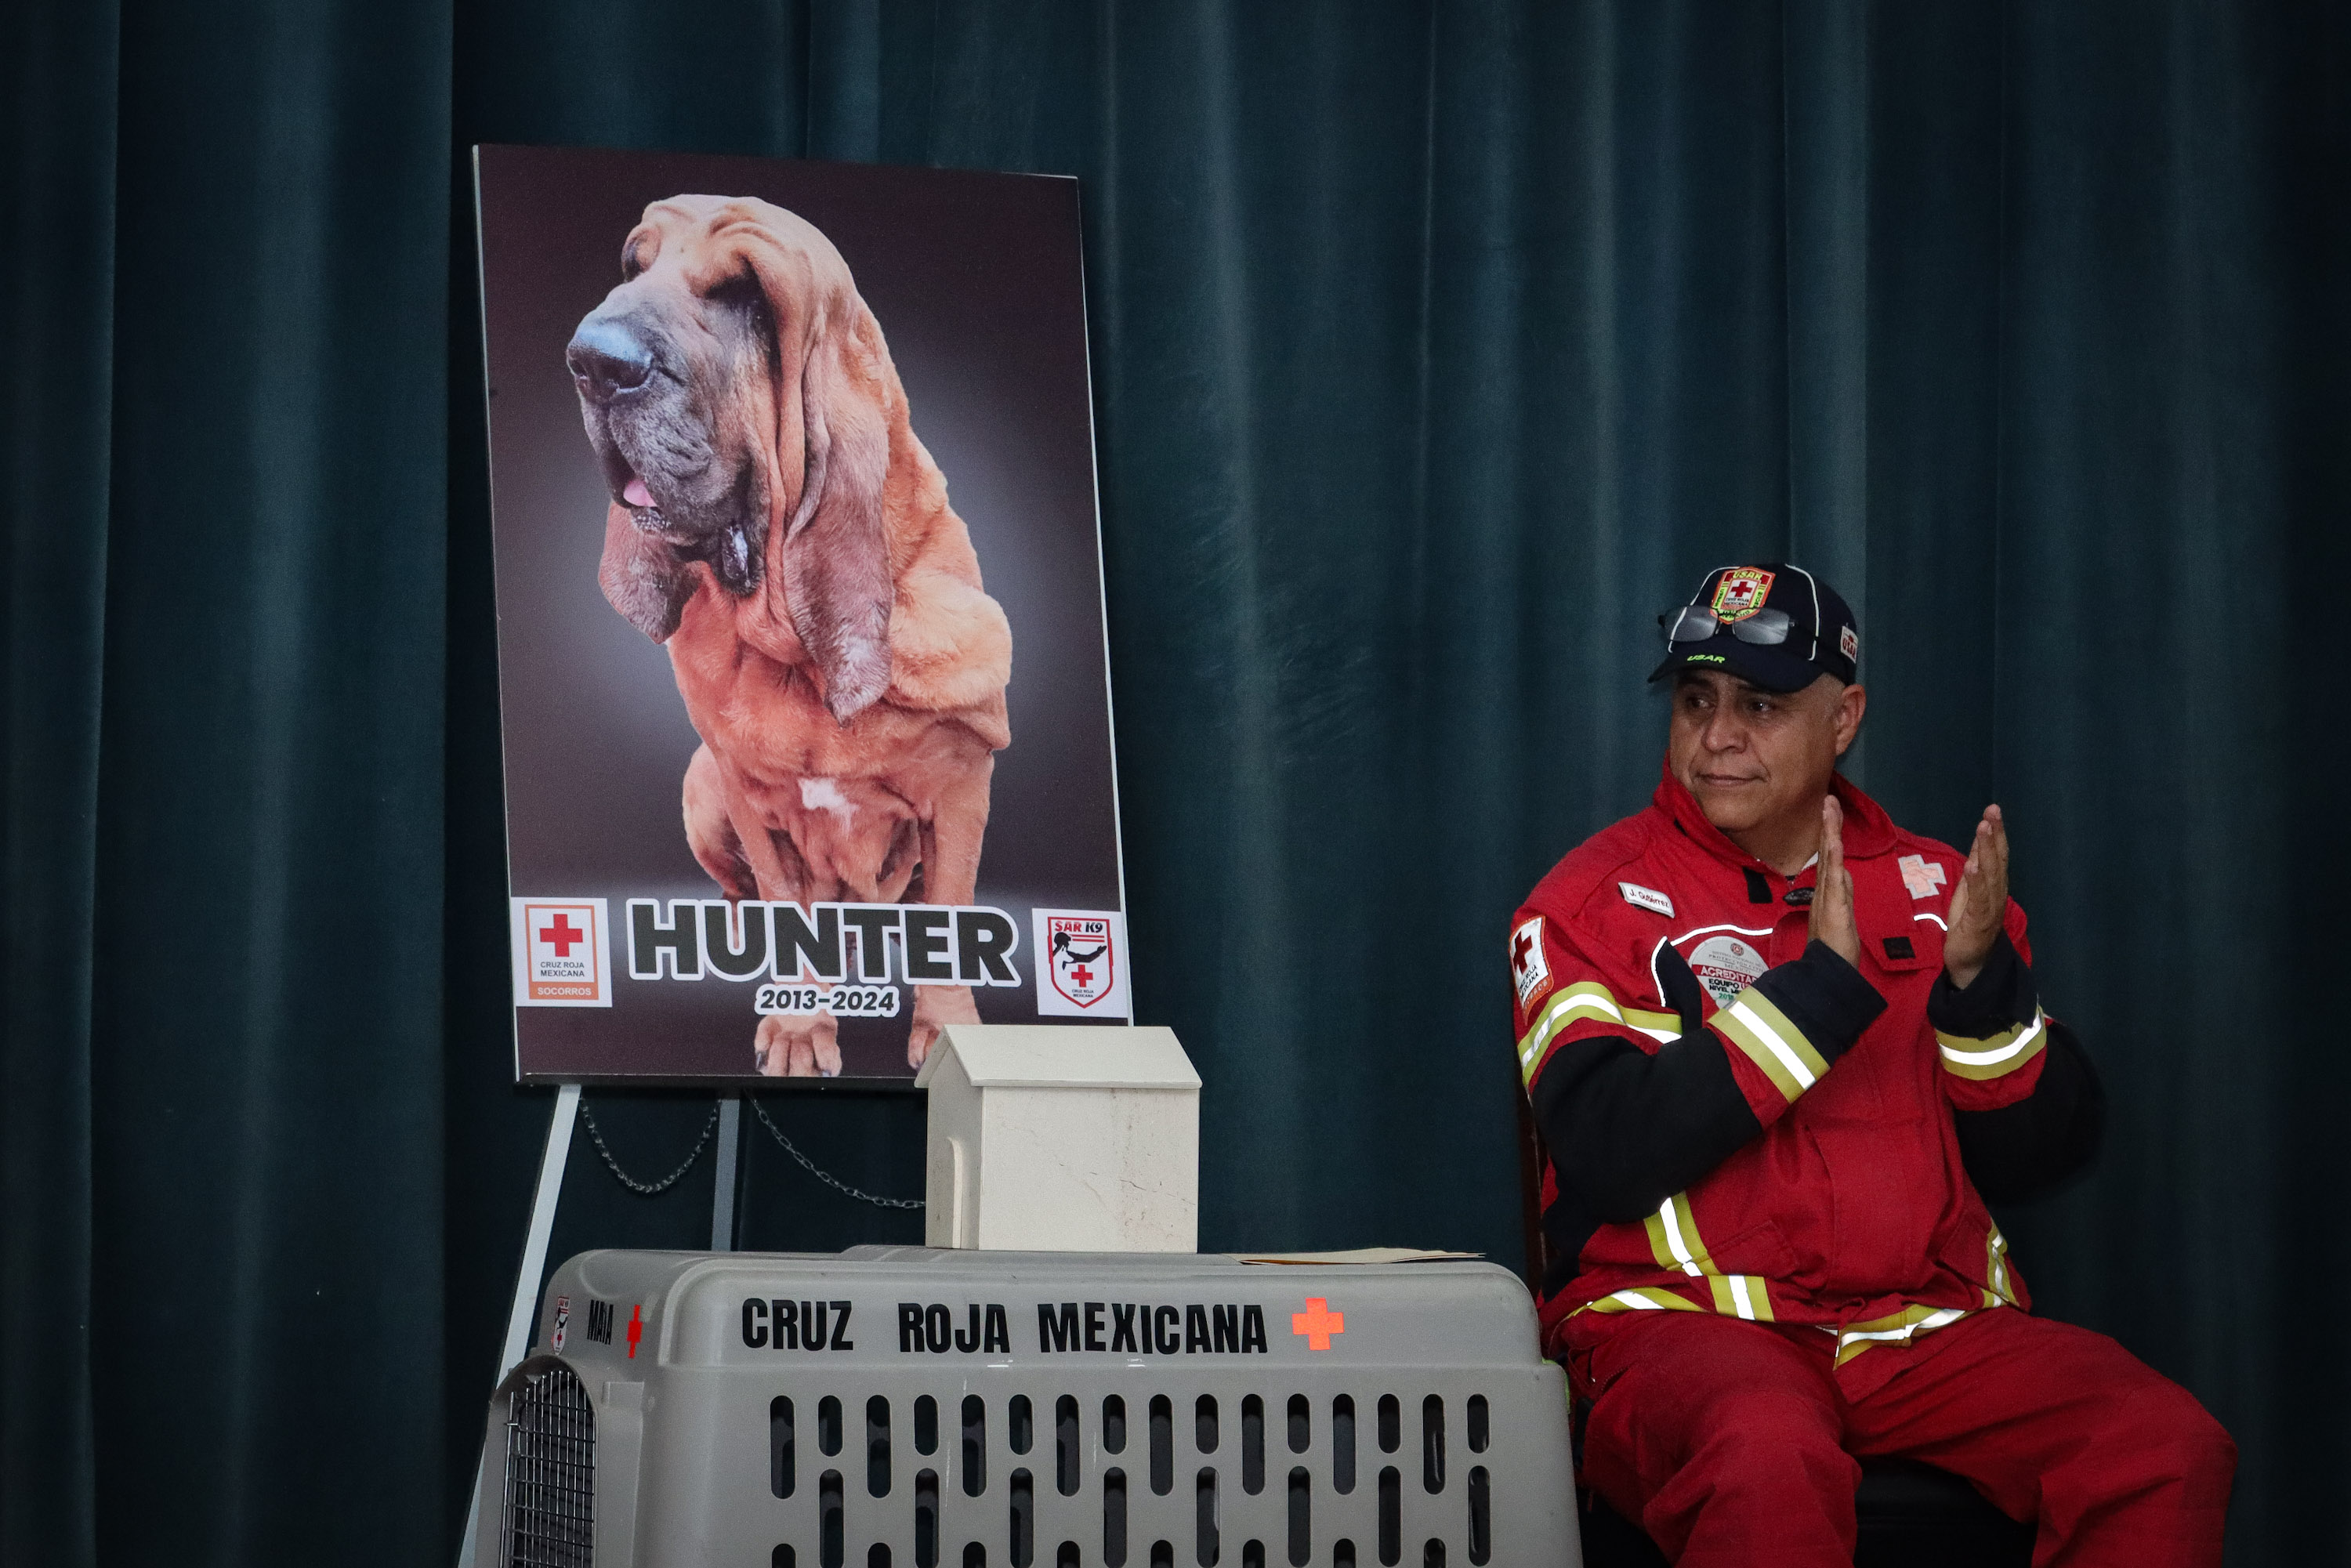 Cruz Roja realiza homenaje póstumo a Hunter